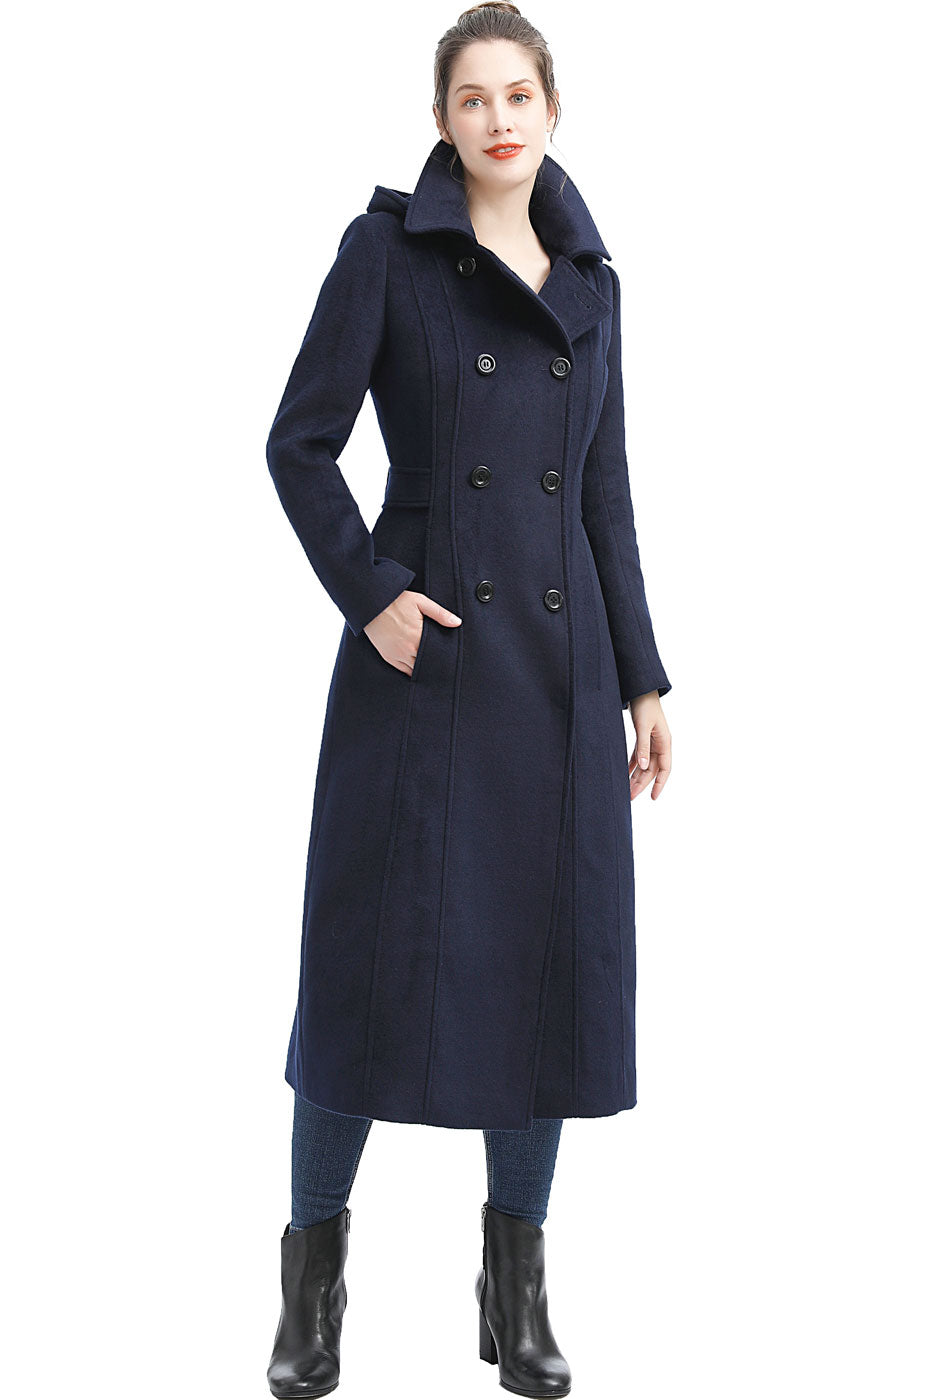 BGSD Women Lea Hooded Full Length Long Wool Coat